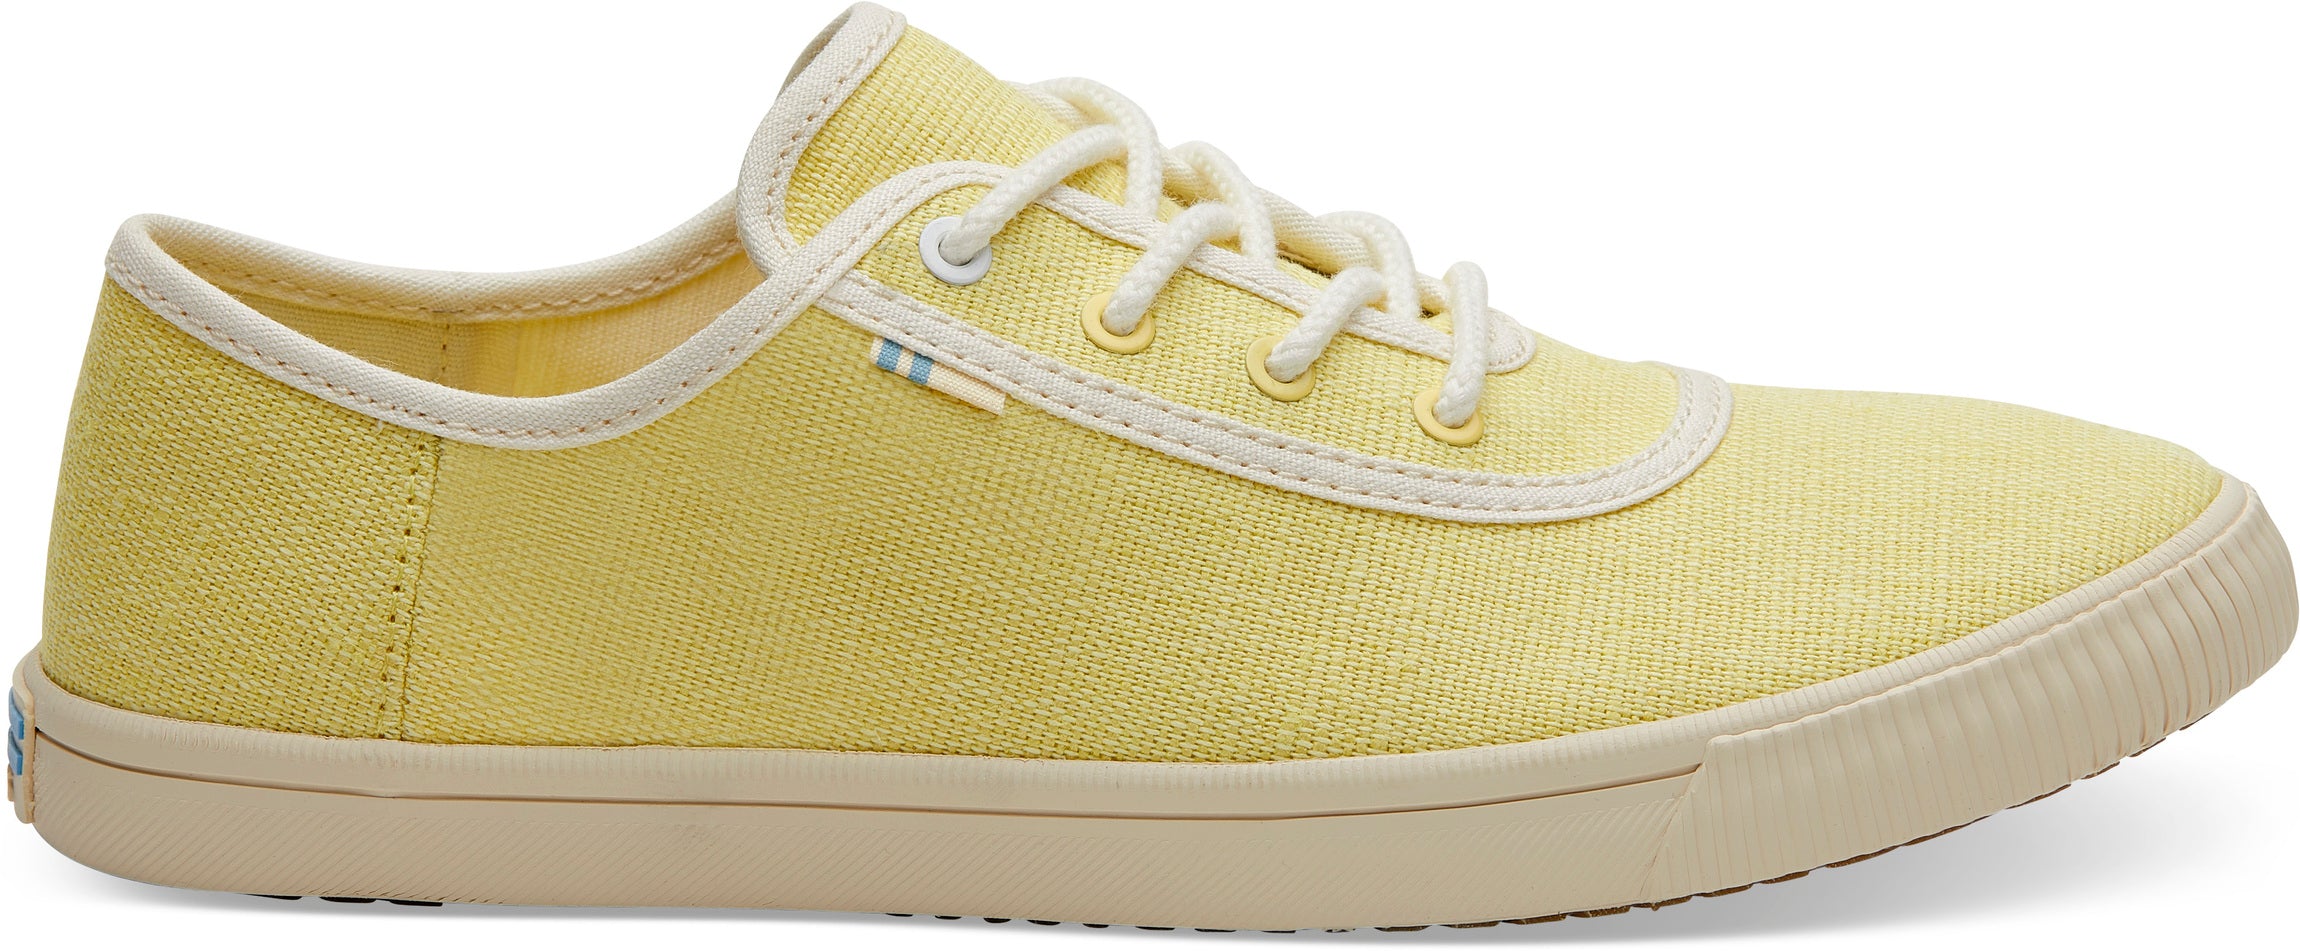 Dámske žlté tenisky TOMS Sunshine Carmel Sneakers